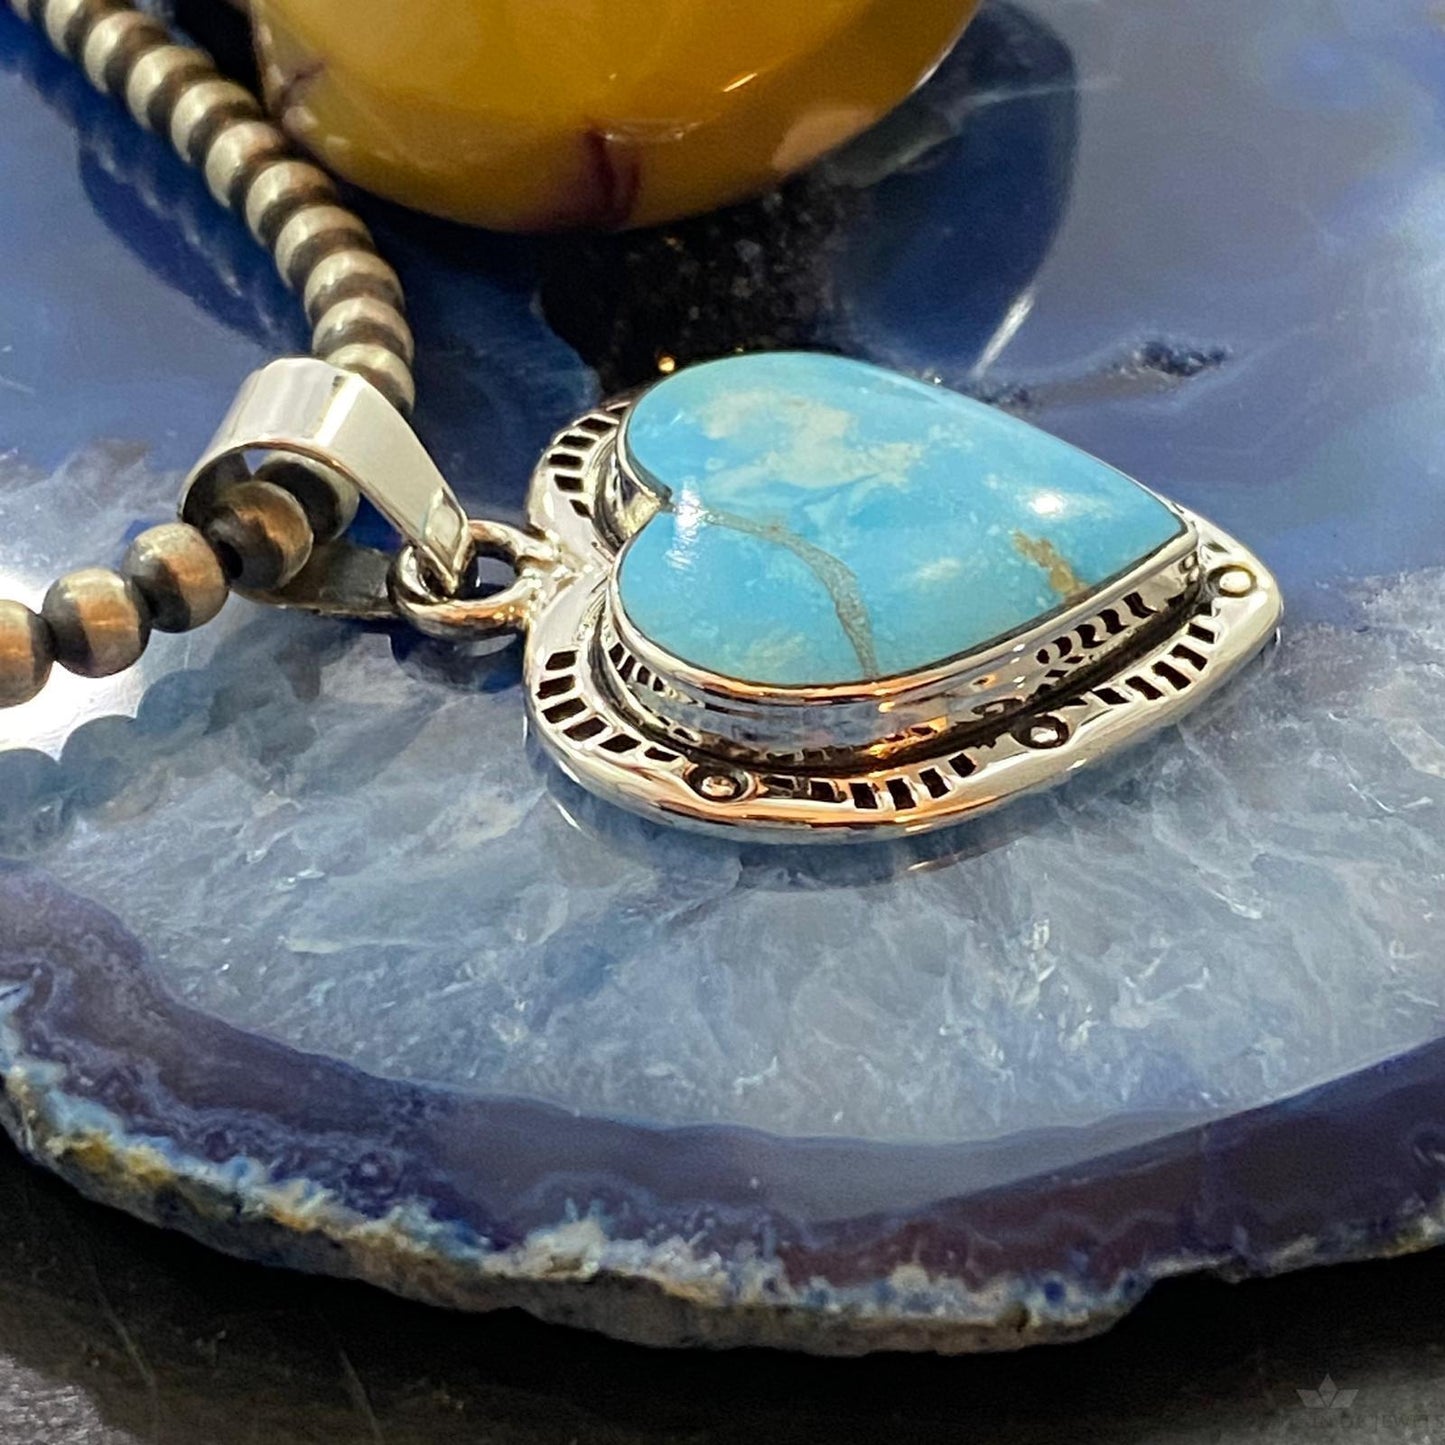 Native American Sterling Silver Blue Ridge Turquoise Heart Pendant For Women #5